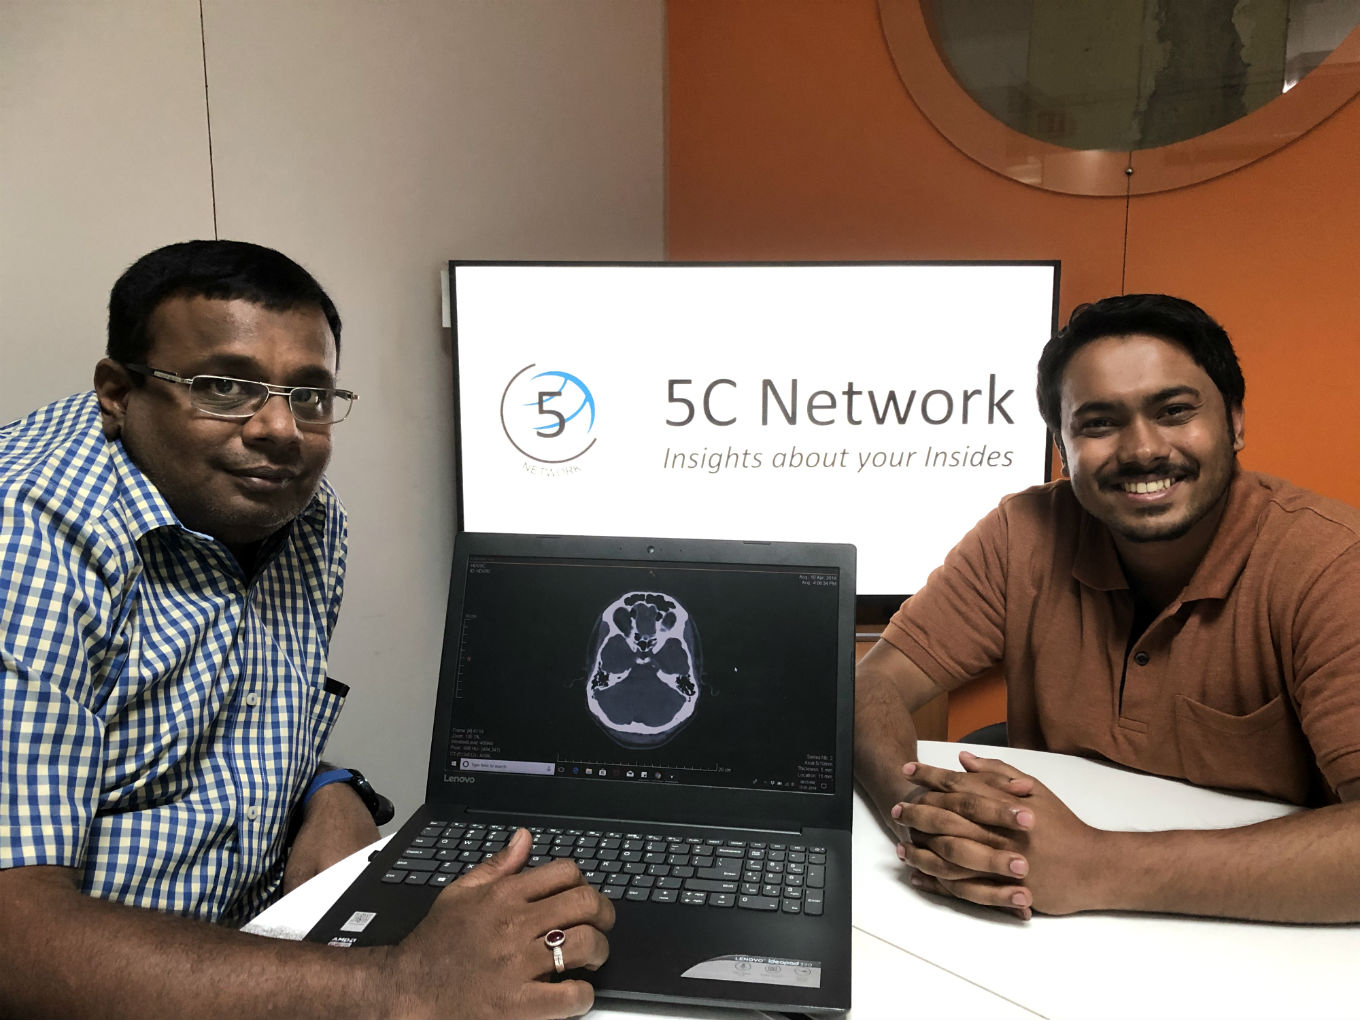 Digital diagnostic platform 5C Network acquired healthtech startup Krayen for an undisclosed sum